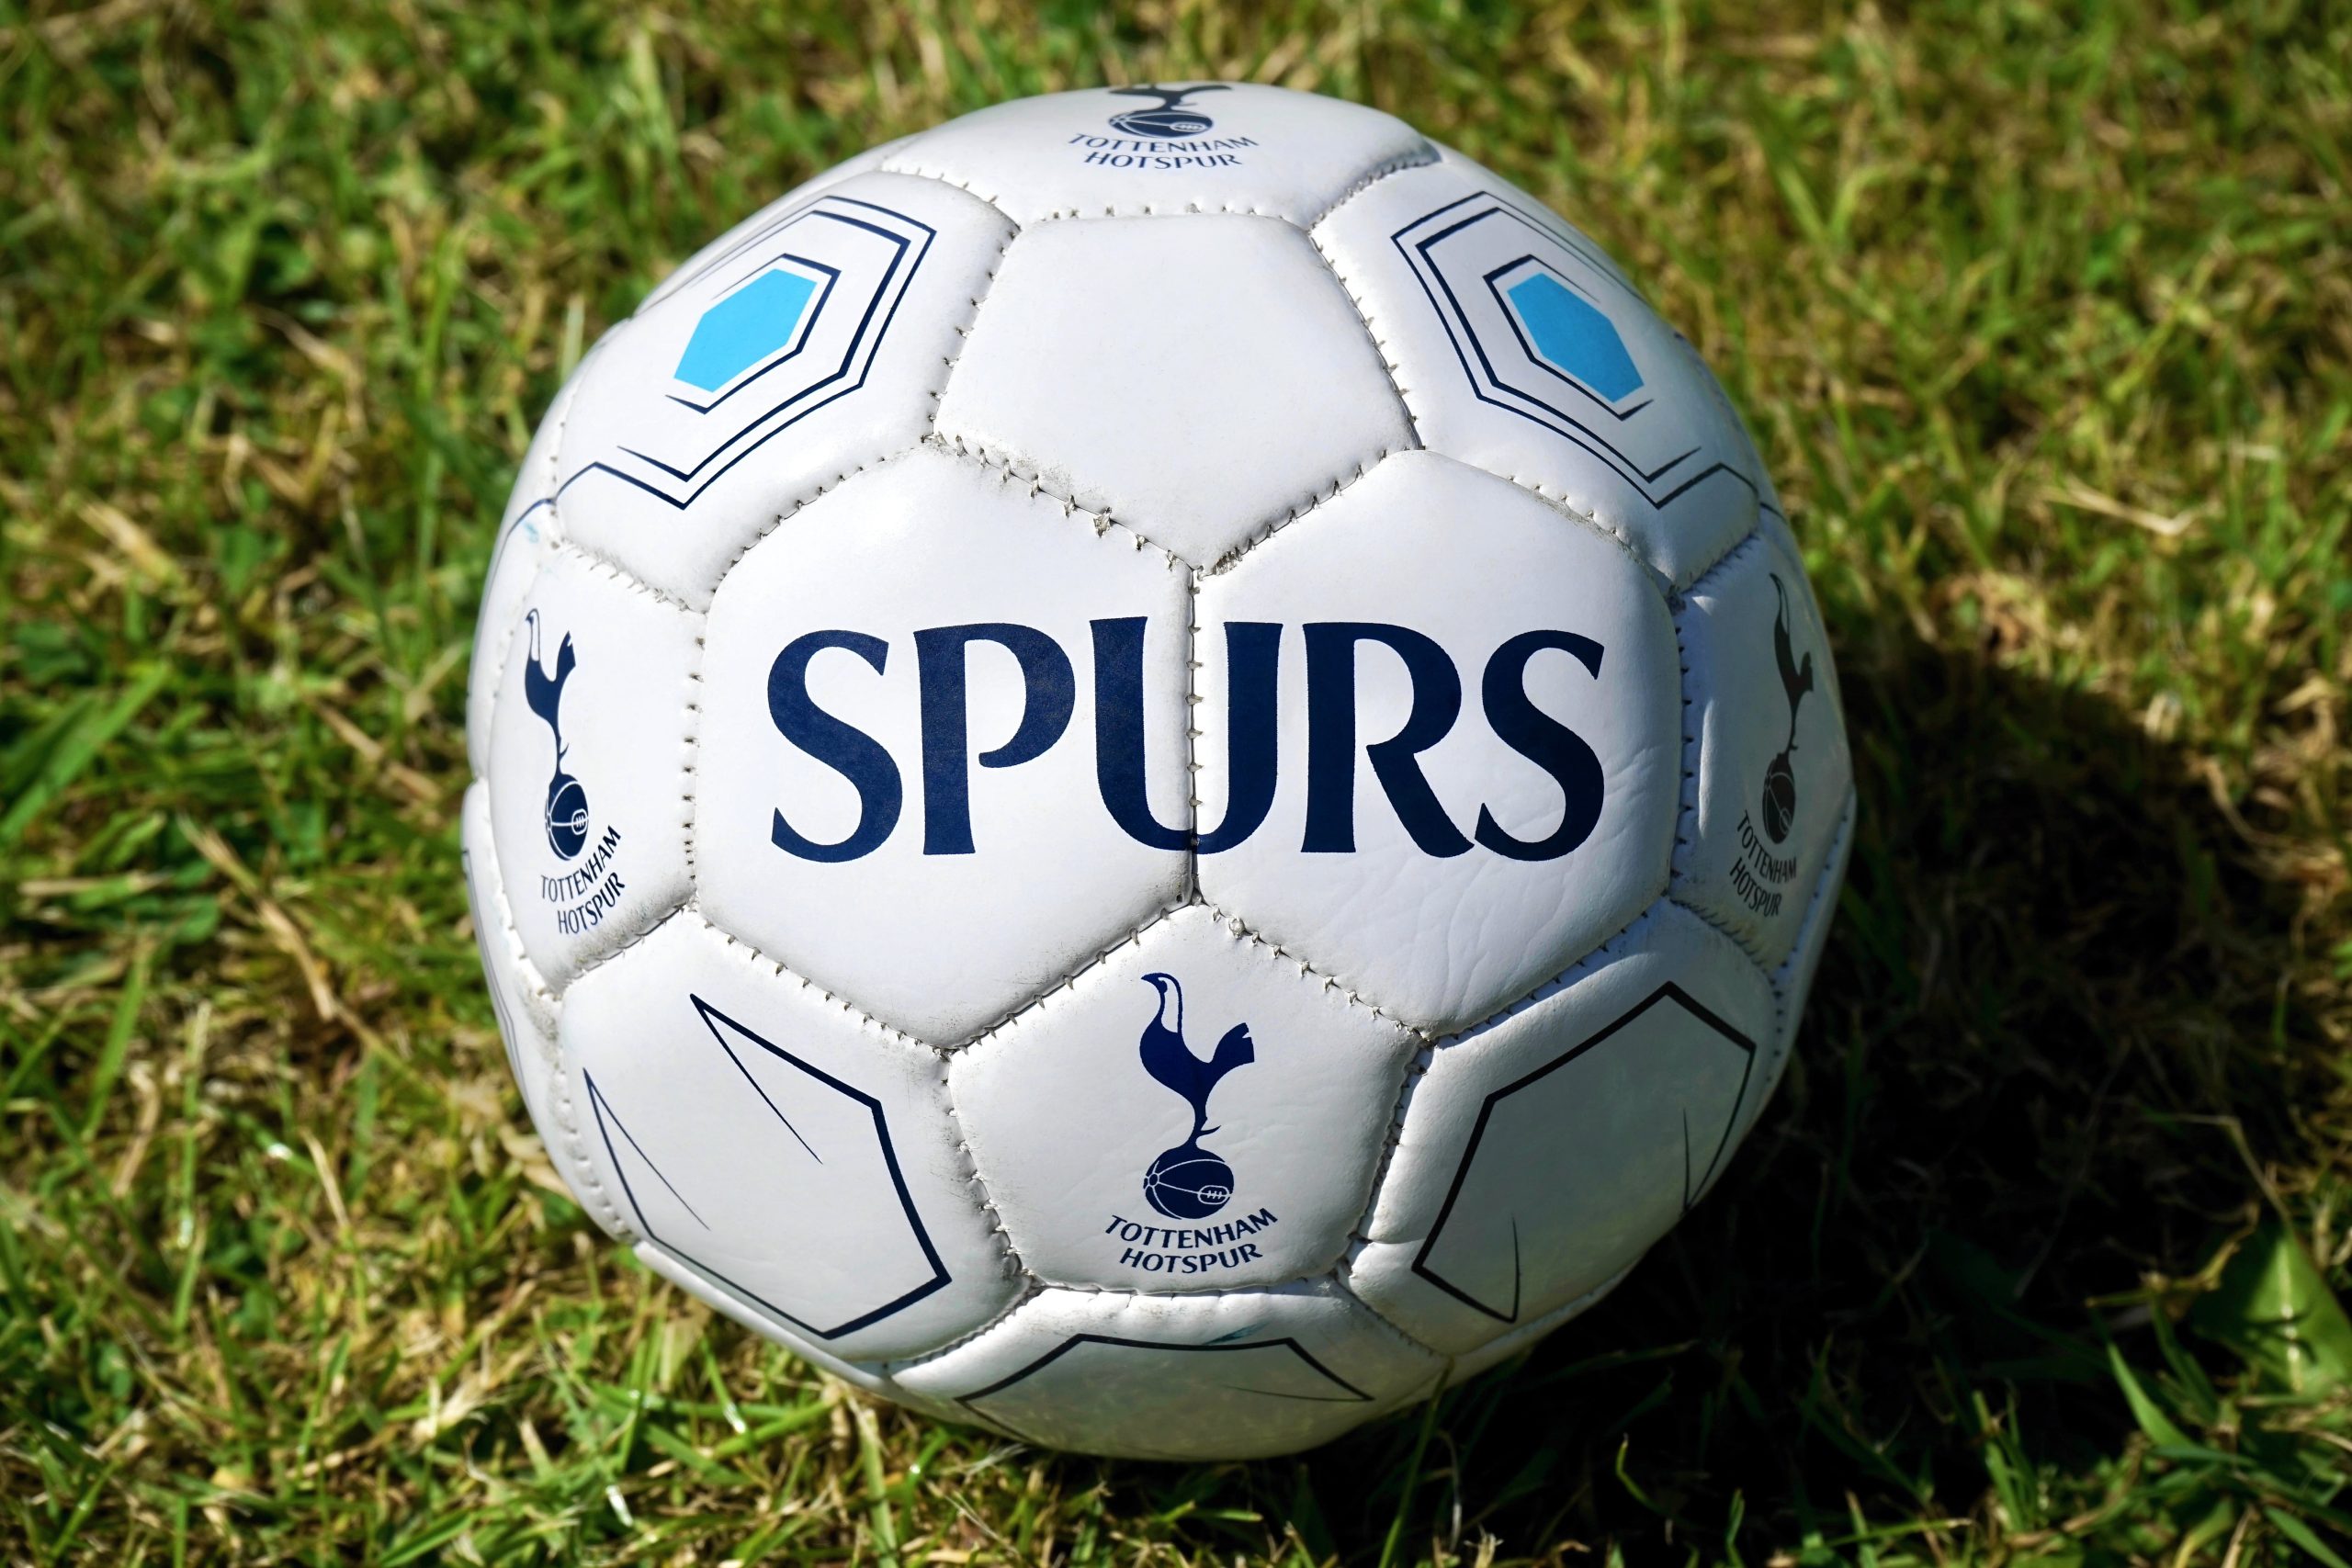 Harry Kane Becomes Tottenham’s Joint-Highest Goal Scorer in the Club’s History